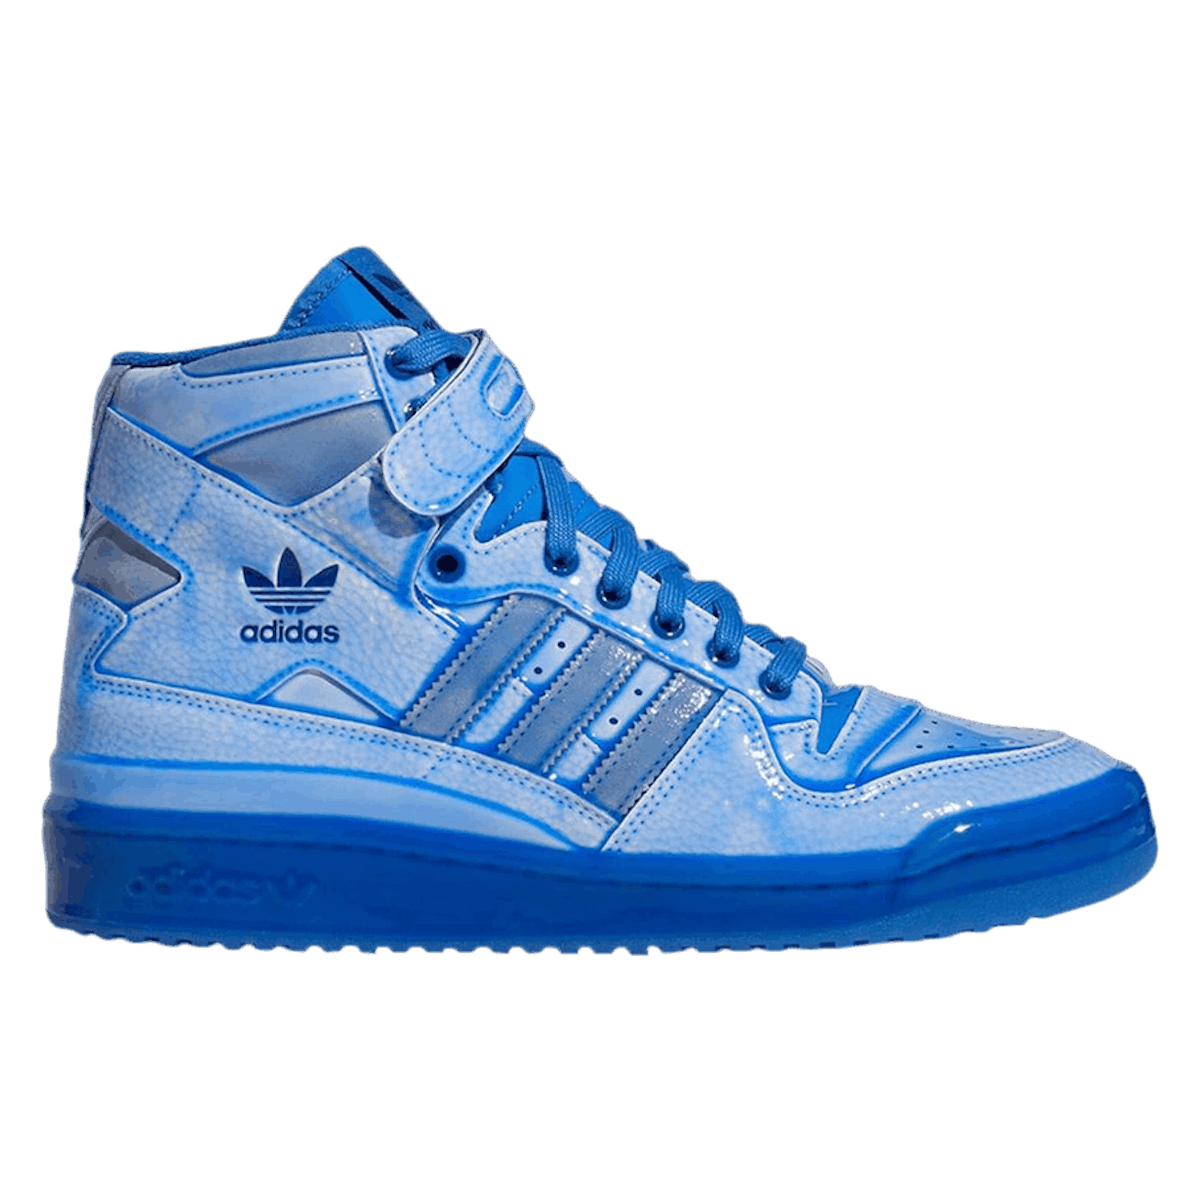 Jeremy Scott x Adidas Forum Dipped "Blue"